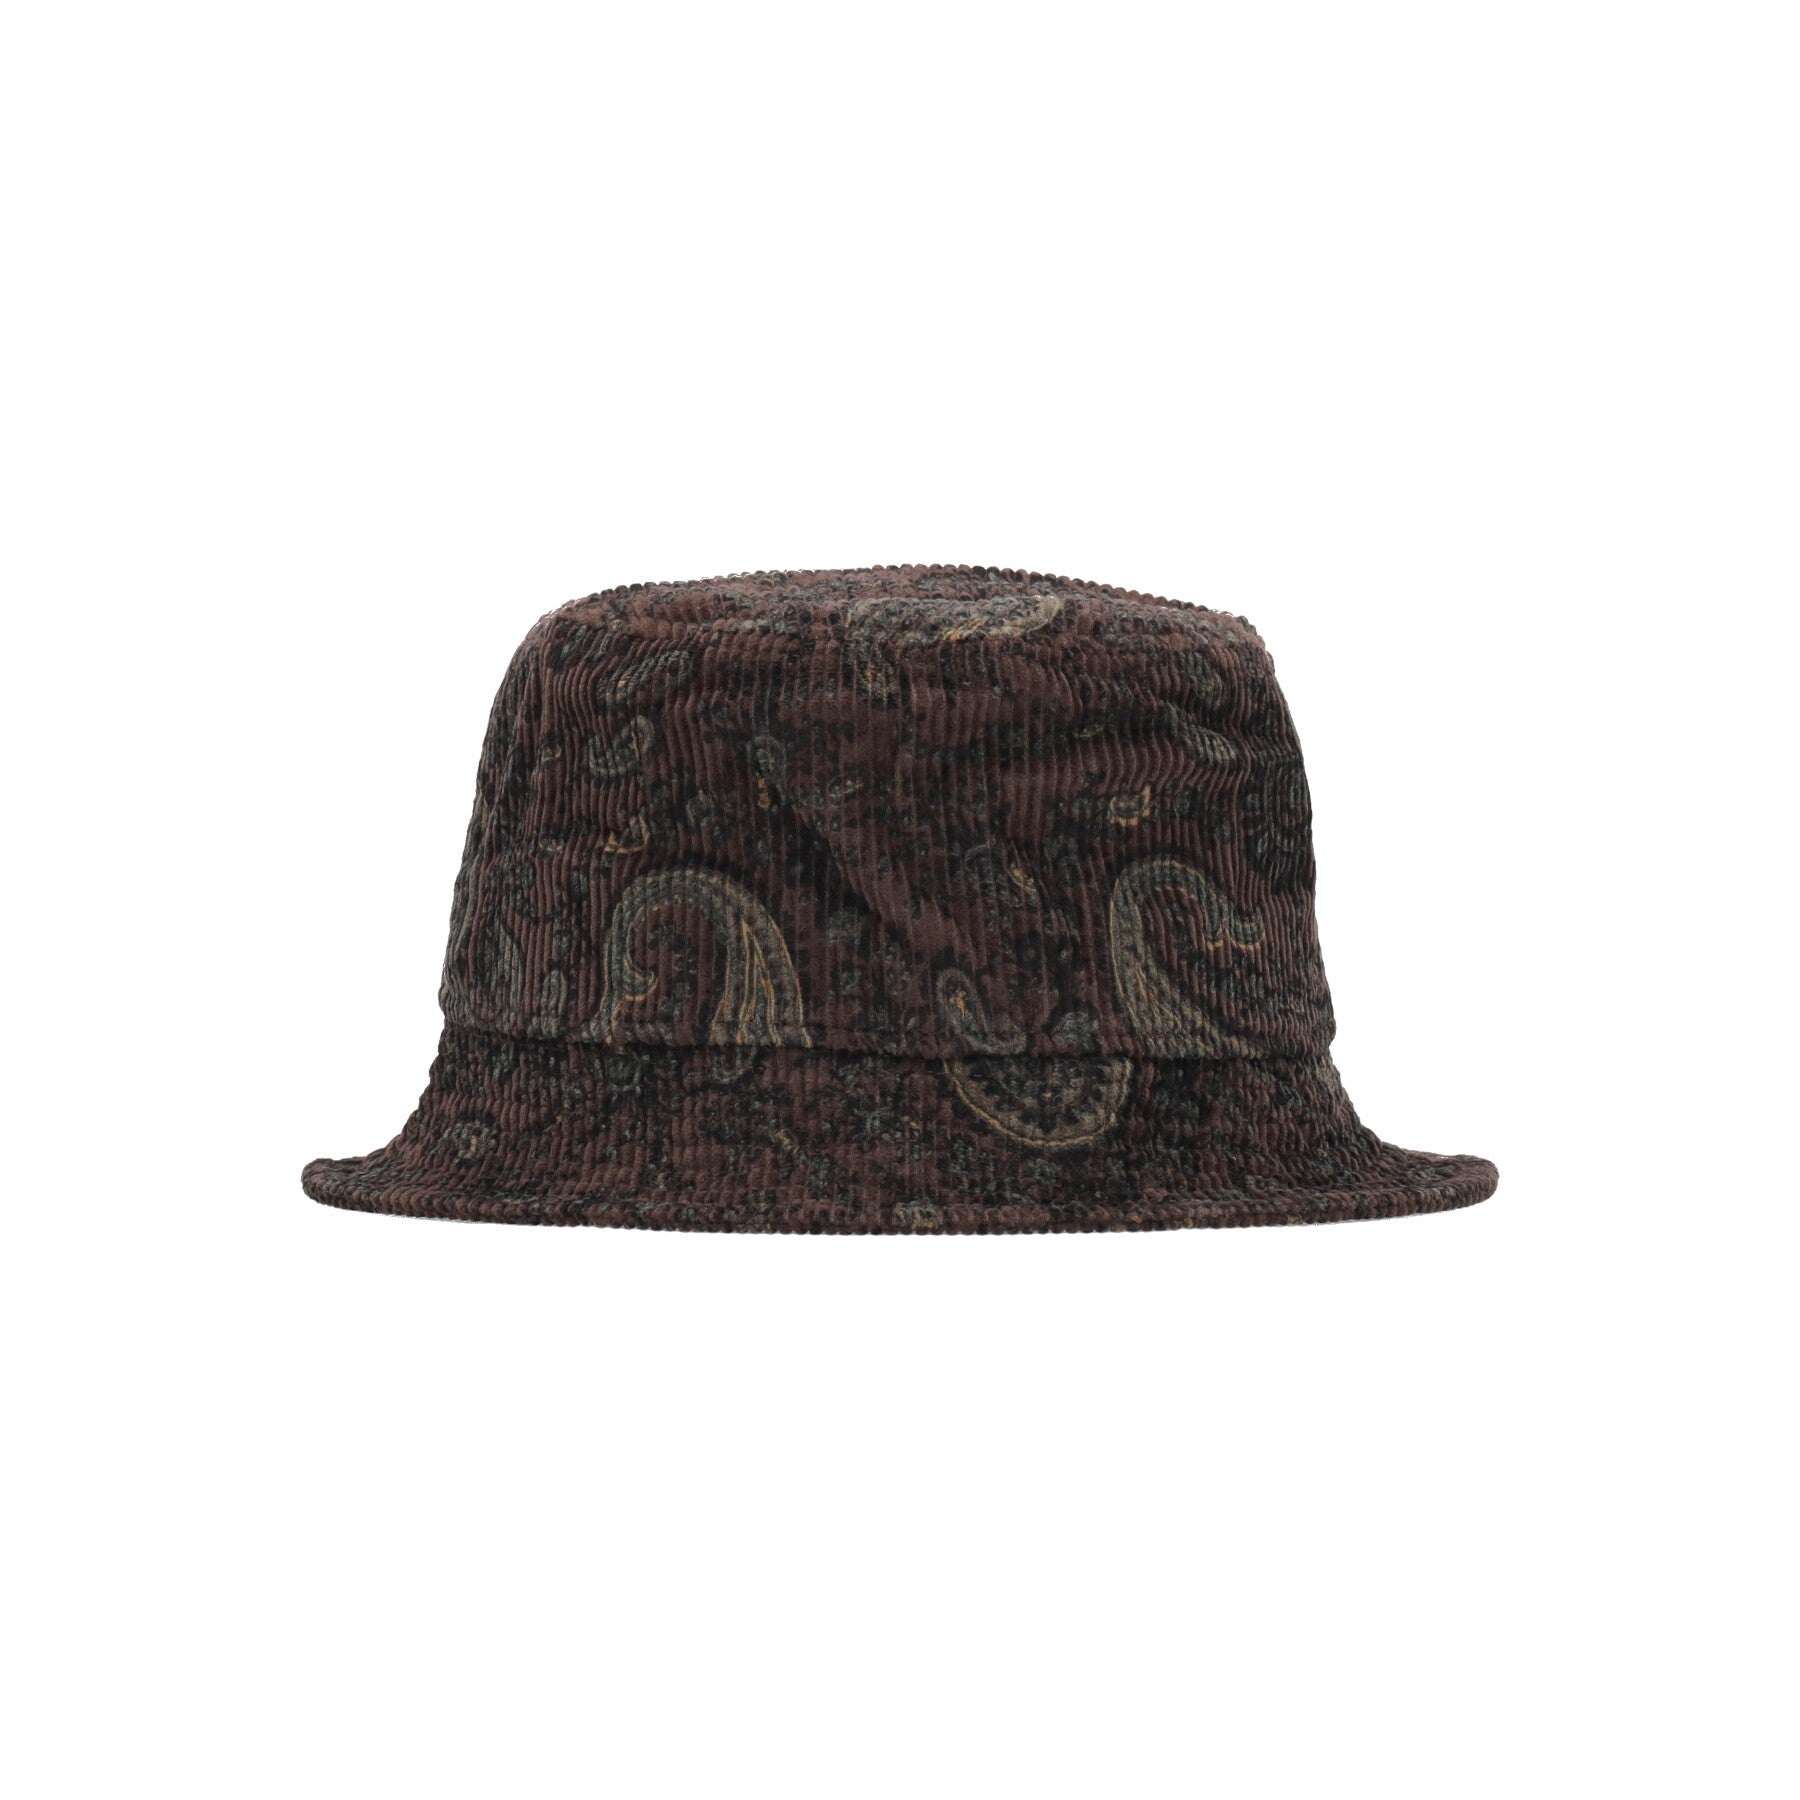 Carhartt Wip, Cappello Da Pescatore Uomo Cord Bucket Hat, Paisley Print/buckeye